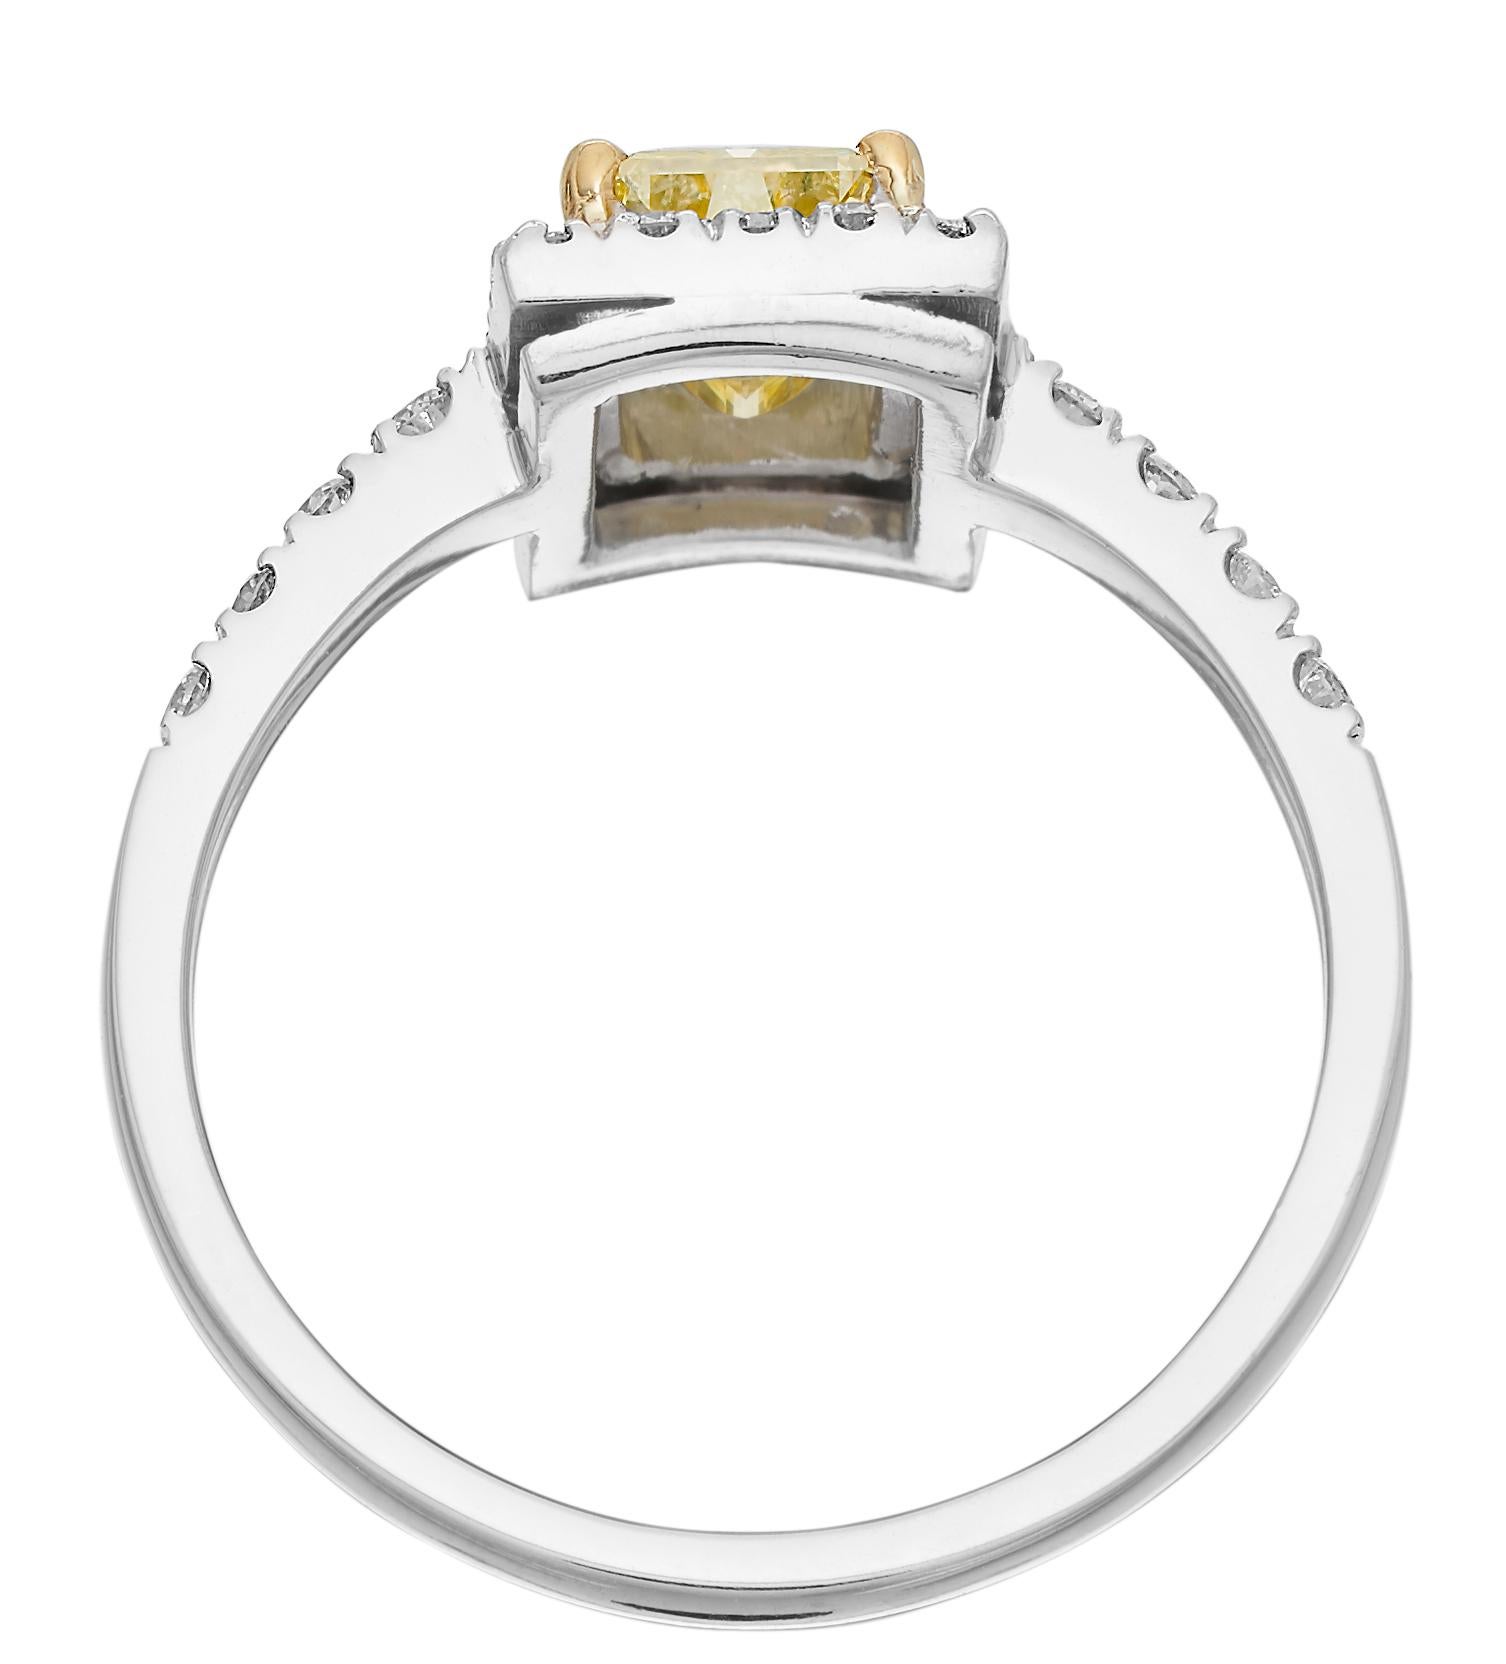 Modern GCS Certified 1.05 ct Fancy Intense Yellow Diamond, Emerald Cut Ring in Platinum